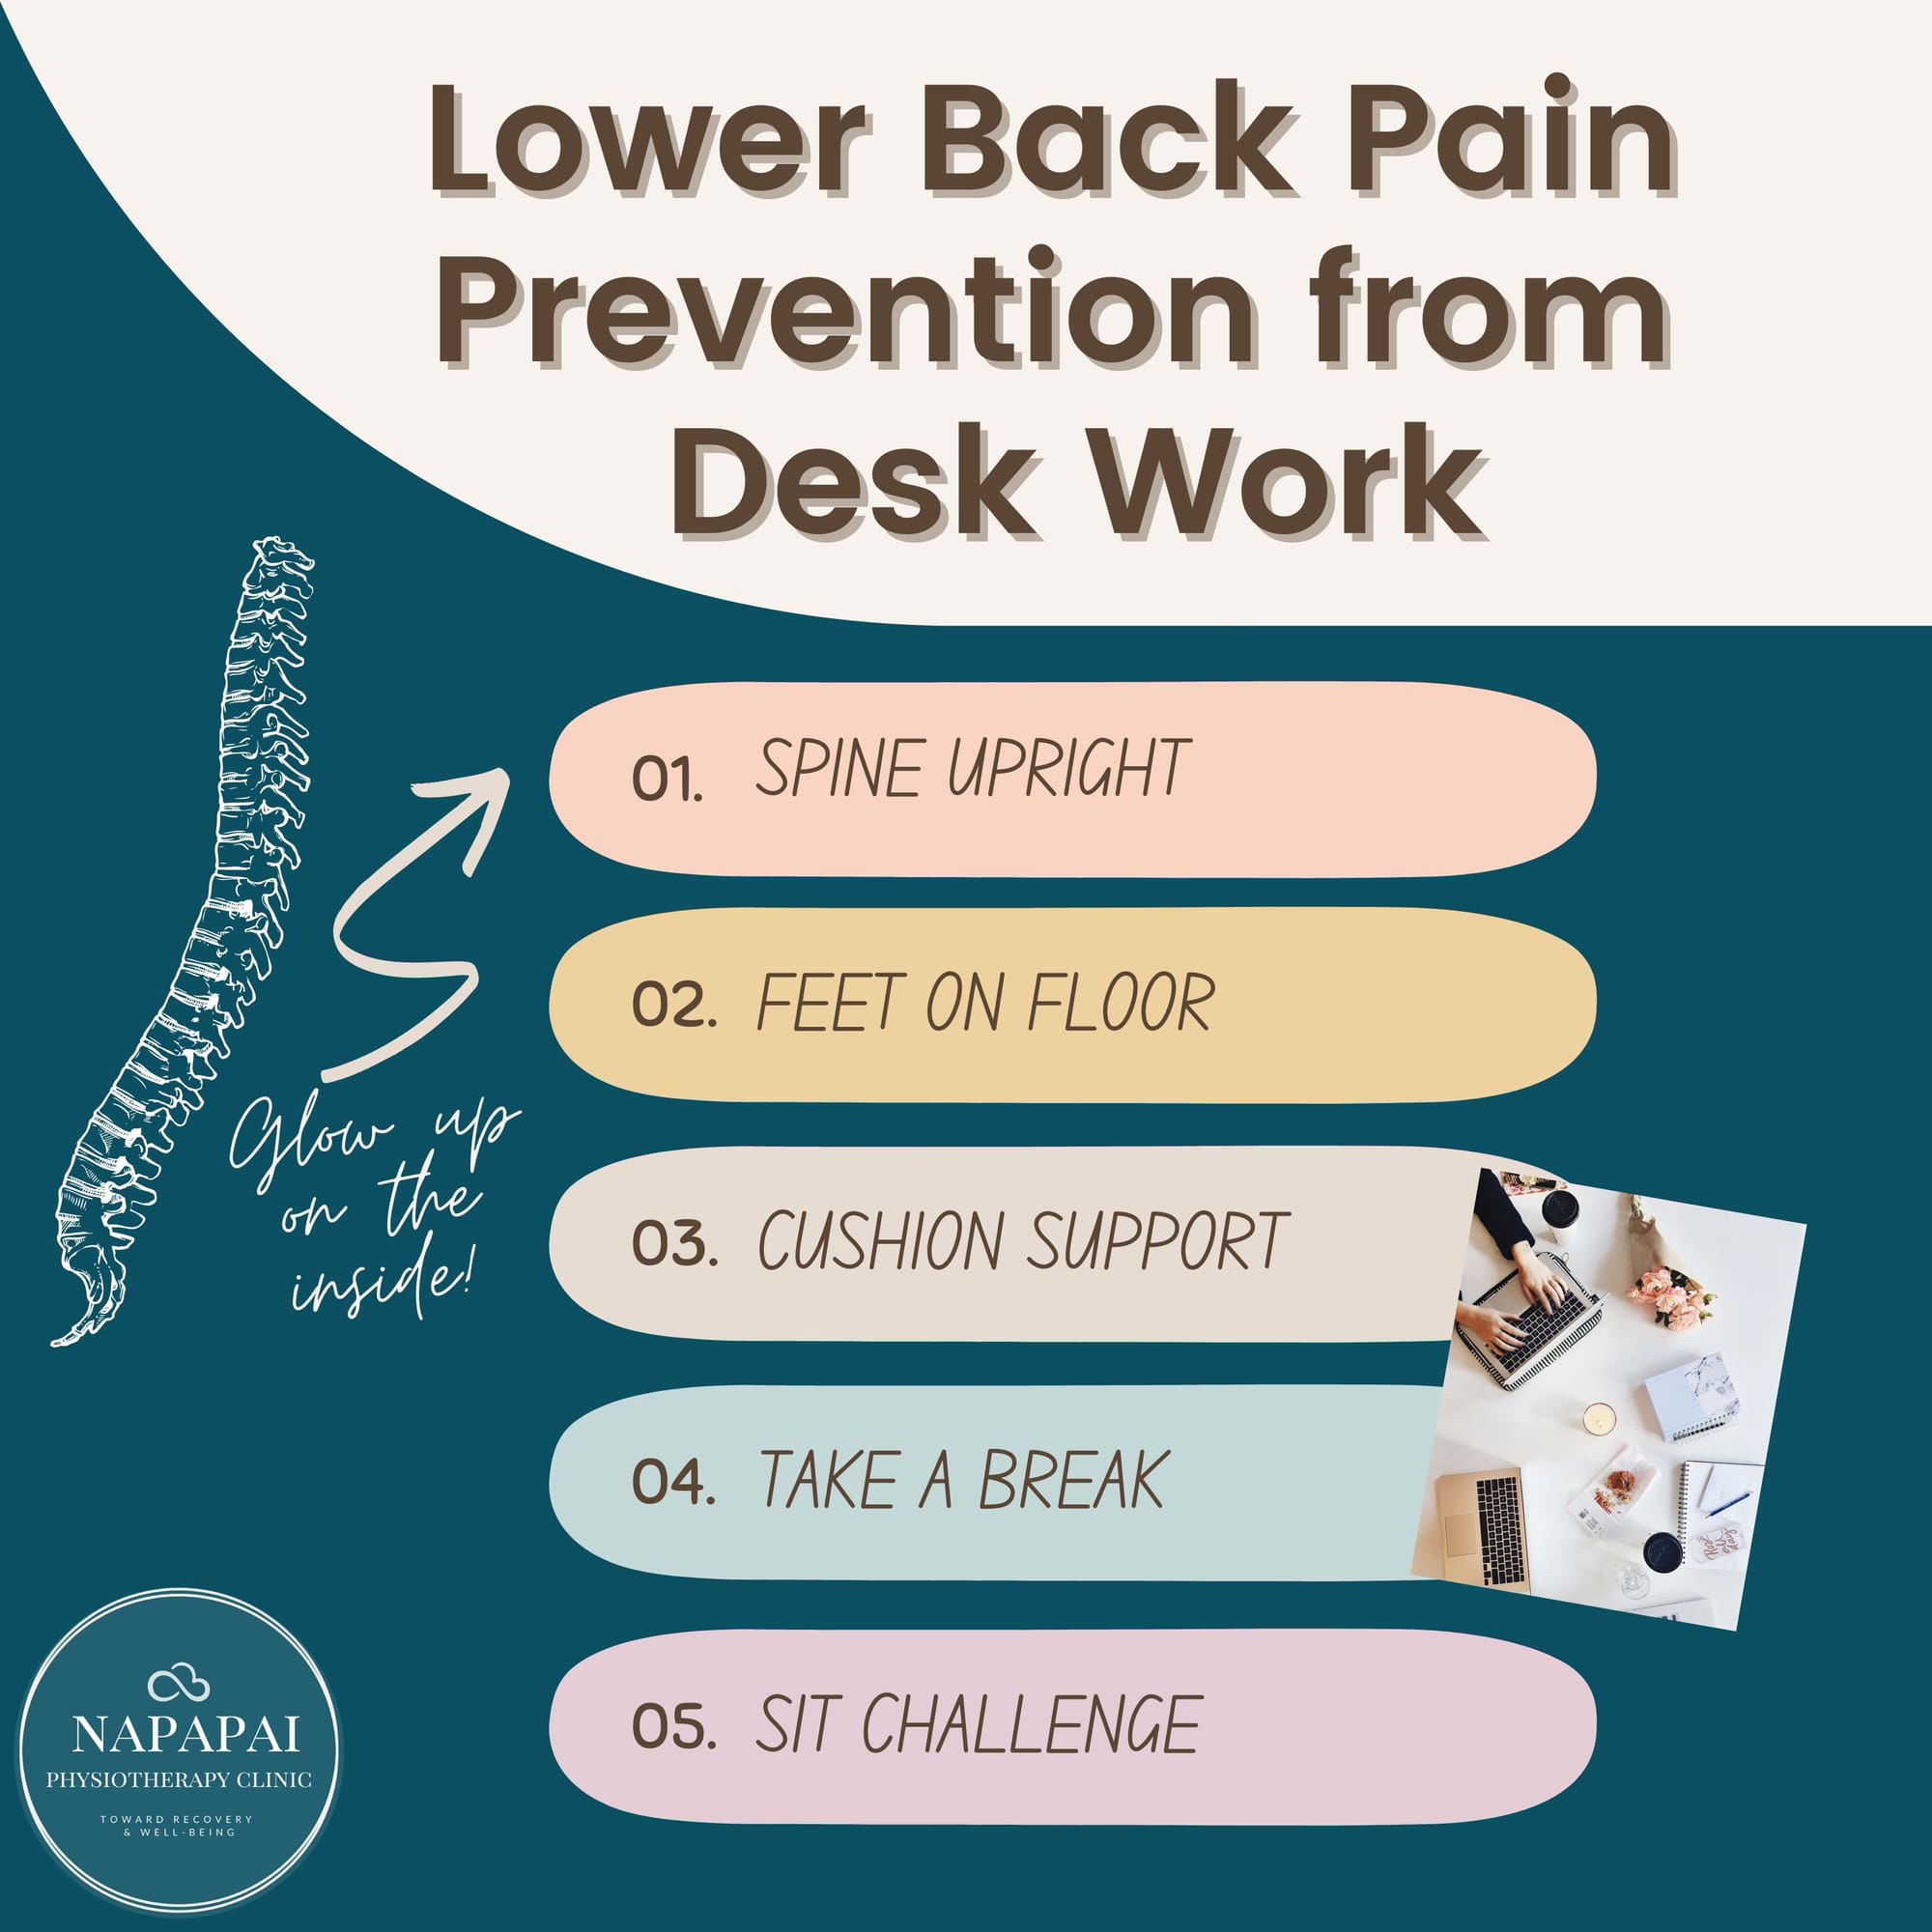 💡Lower Back Pain Prevention from Desk Work